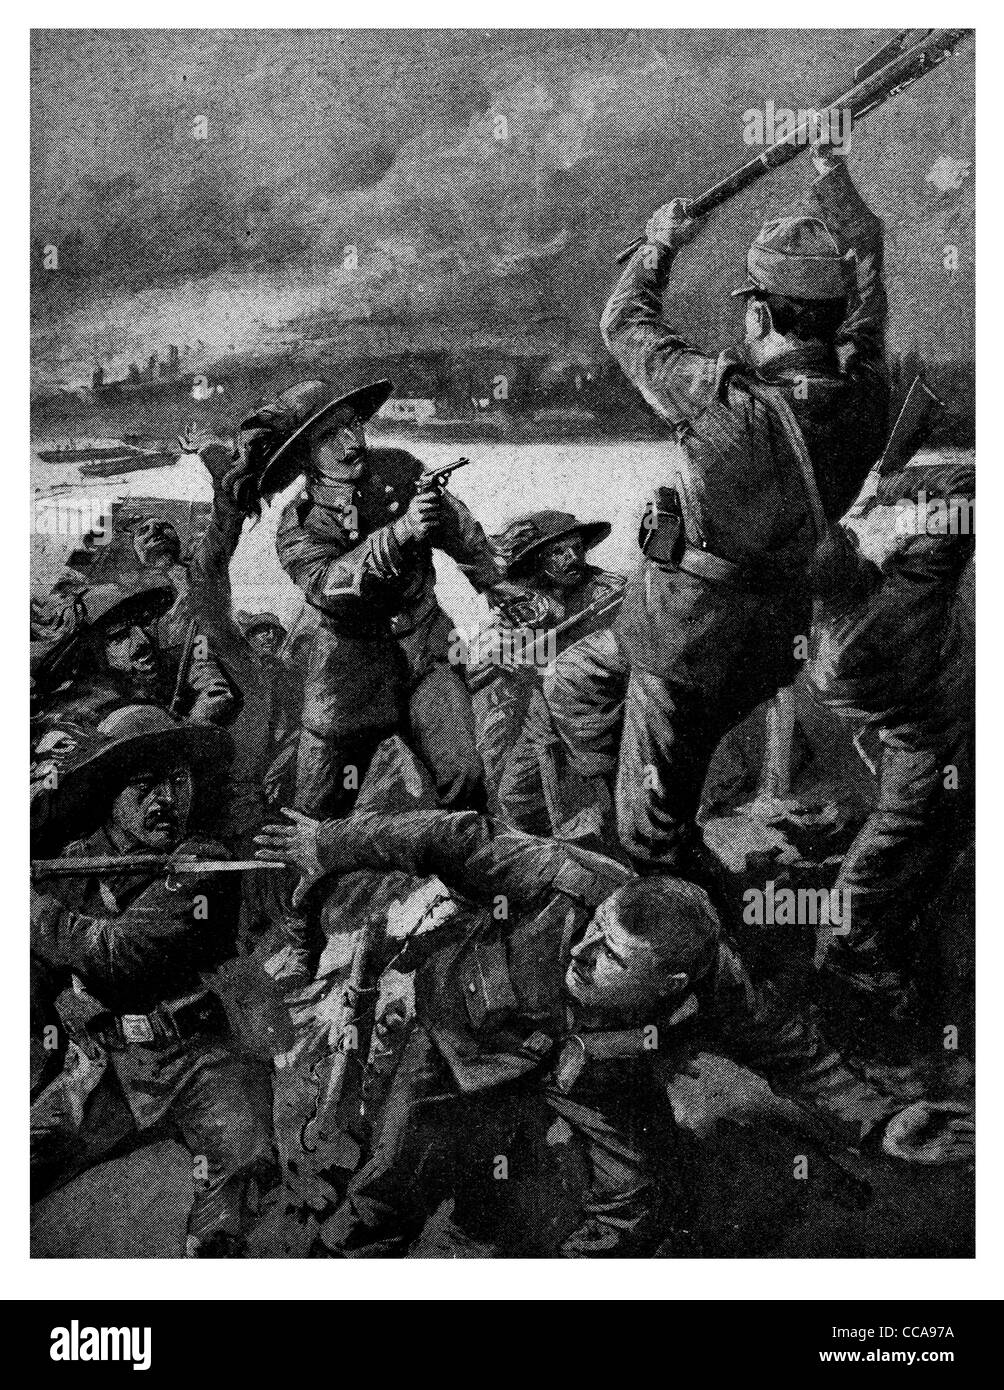 1915 Italian Colonel Rossi 12th Bersaglieri Isonzo river attacking Austrians hand combat rifle pistol bayonet charge advance Stock Photo